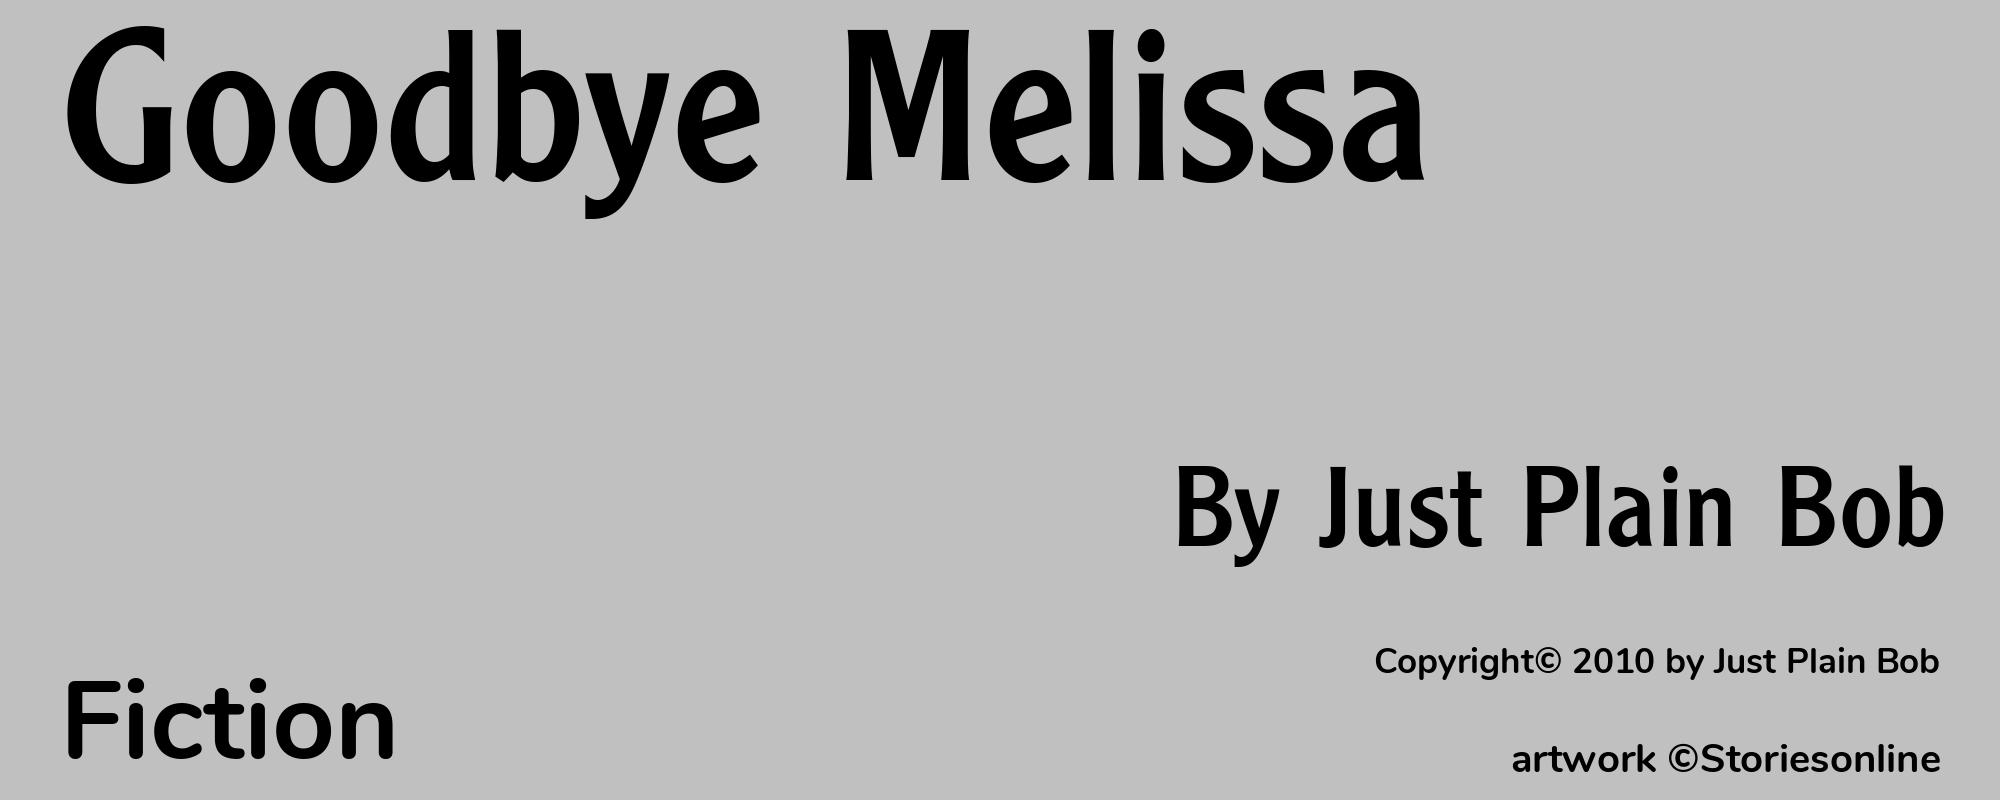 Goodbye Melissa - Cover